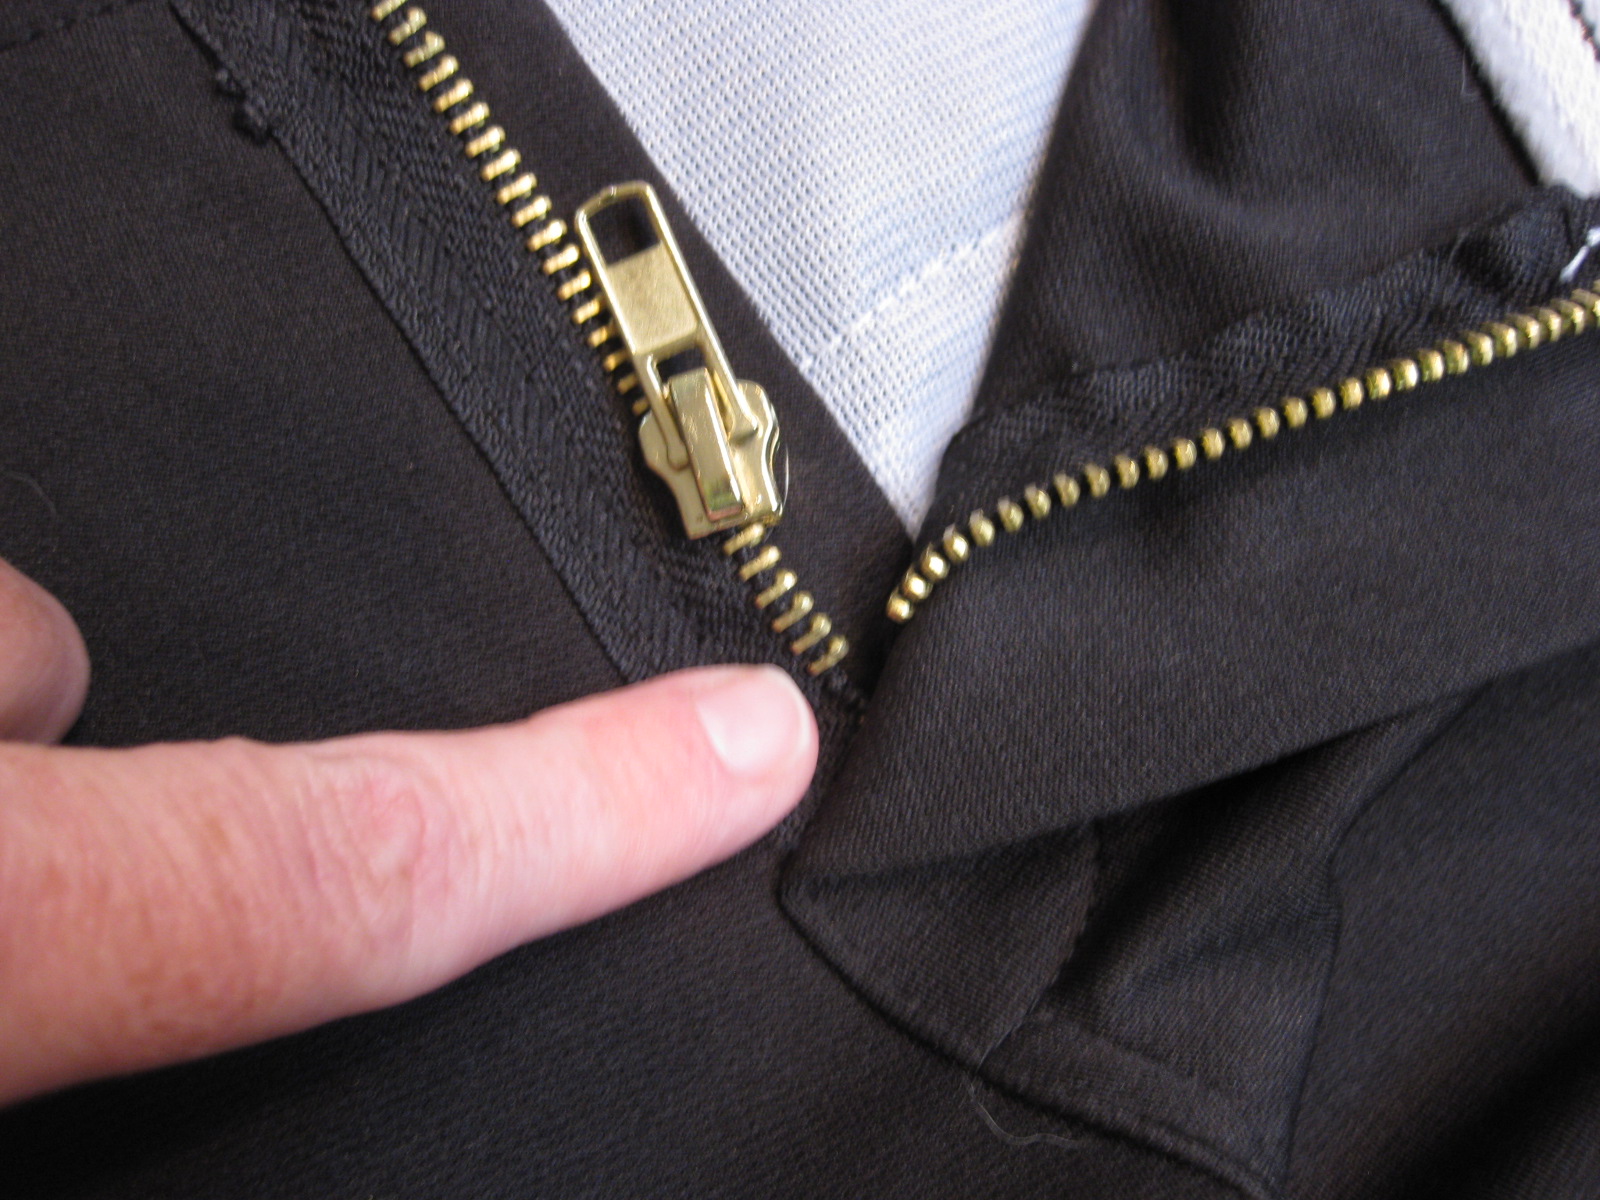 How to handle a zipper emergency